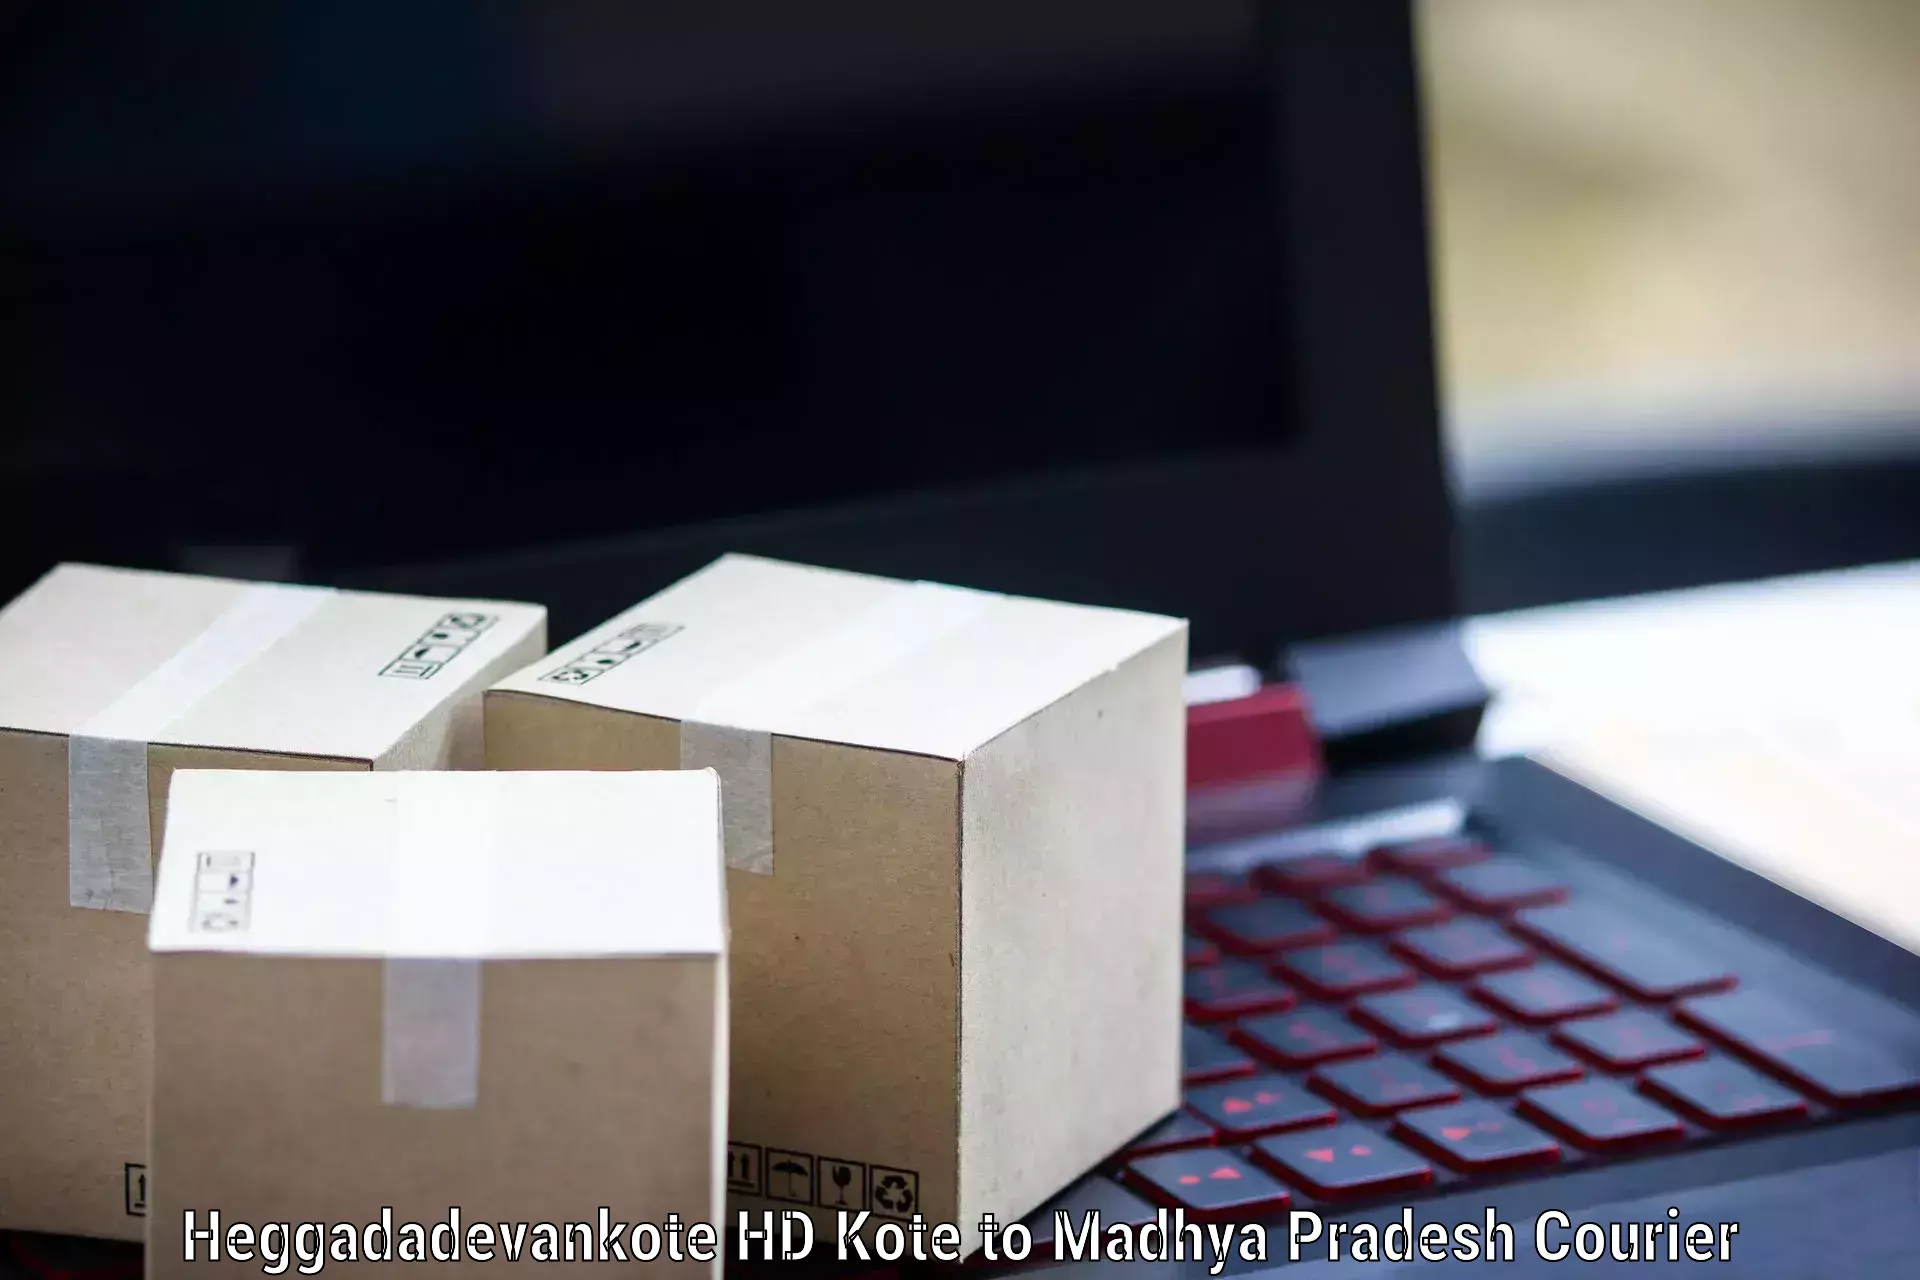 Bulk shipping discounts Heggadadevankote HD Kote to Mandideep